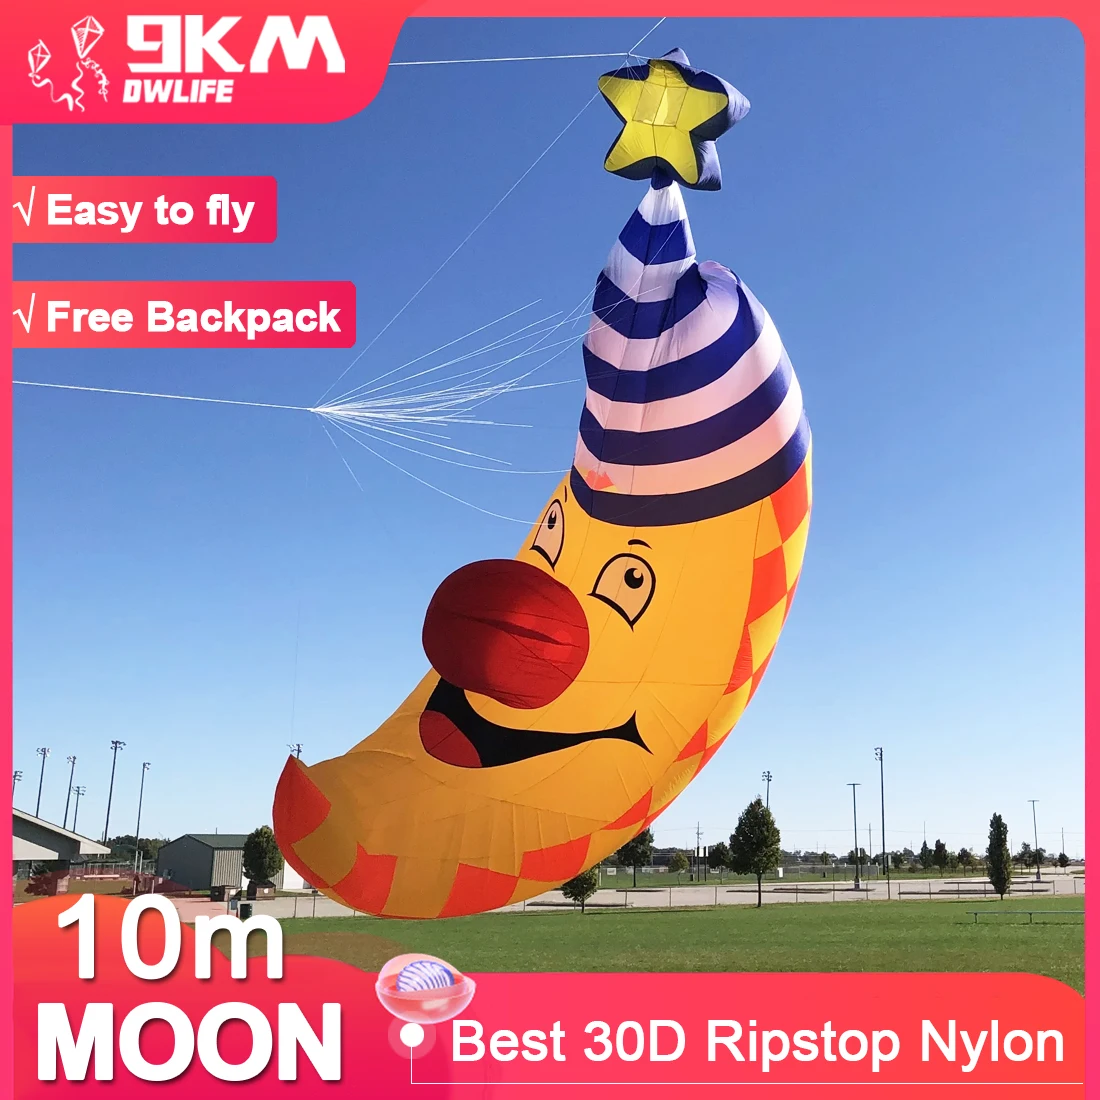 

9KM 10m Moon Kite Line Laundry Pendant Soft Inflatable Show Kite for Kite Festival 30D Ripstop Nylon with Bag